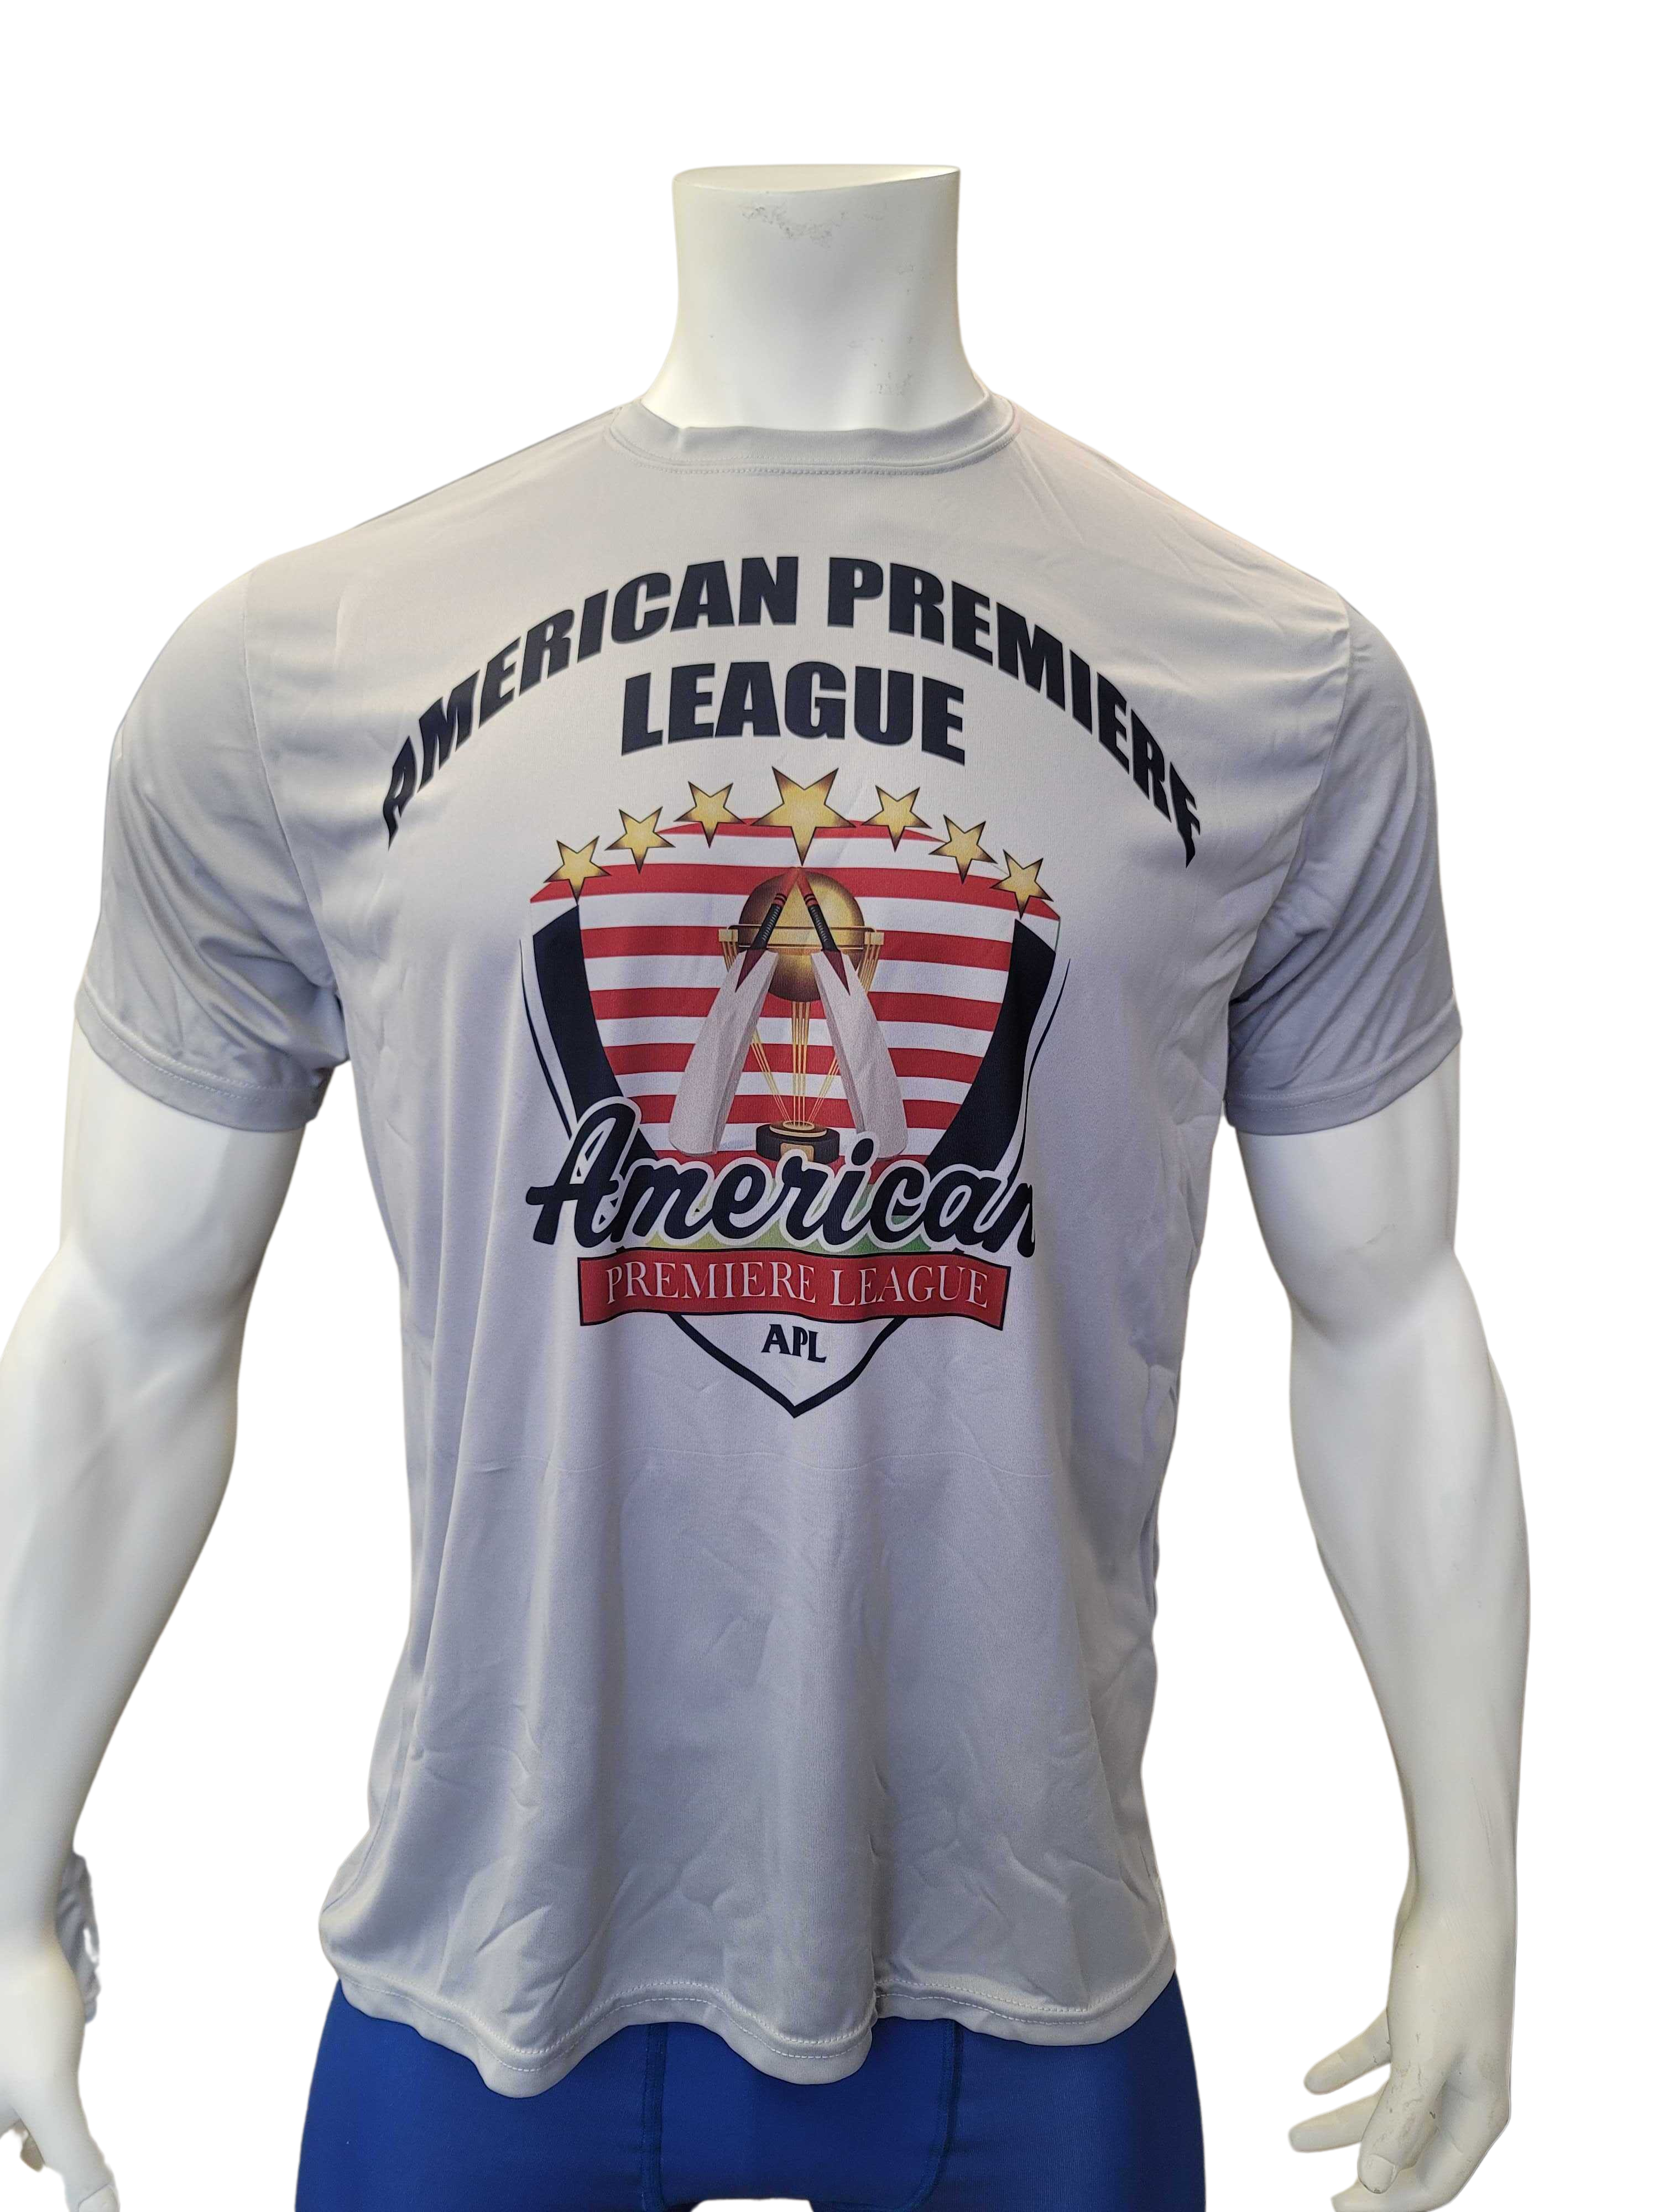 AMERICAN PREMIERE LEAGUE Semi Sublimated Shirt Gray (Design-3)